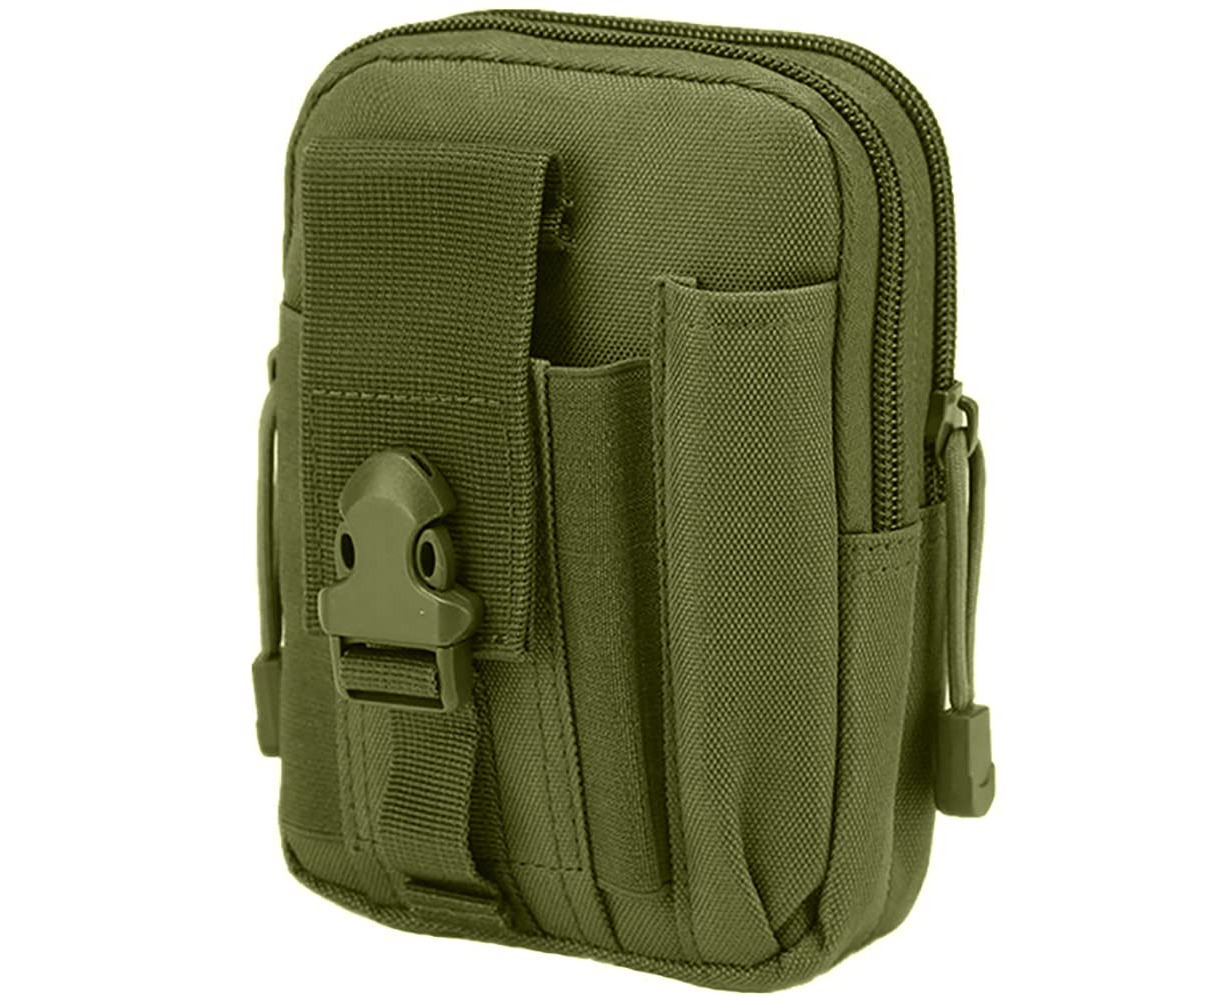 IronSeals Molle EMT Pouch Multipurpose 1000D Nylon Tactical Molle Pouch Waist Bag Cellphone Holster 